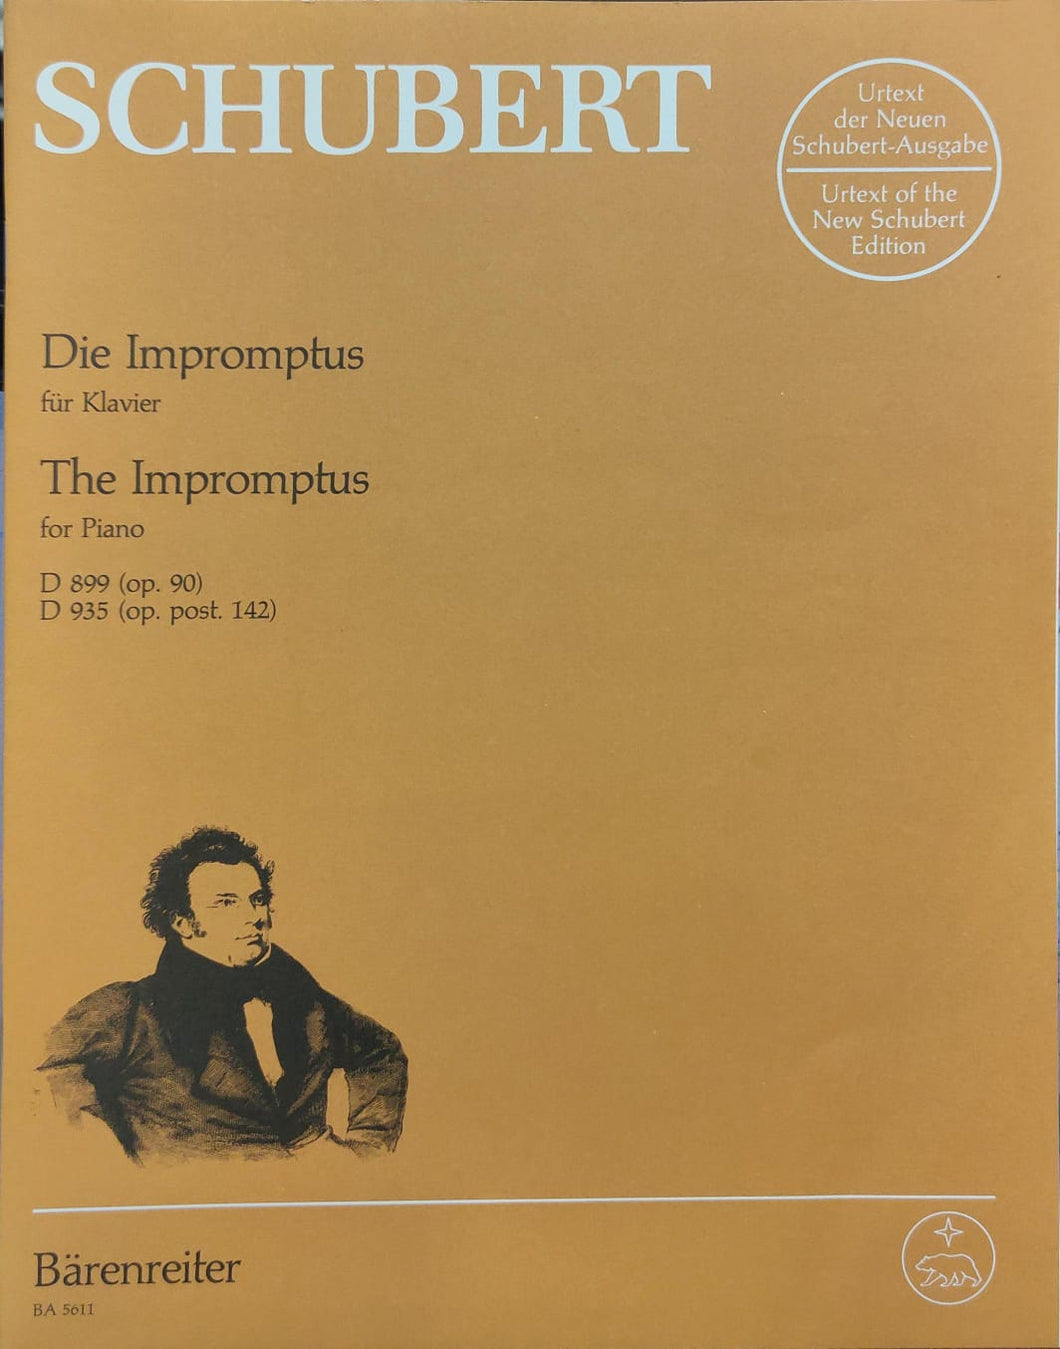 Schubert: The Impromptus for Piano D 899, D 935